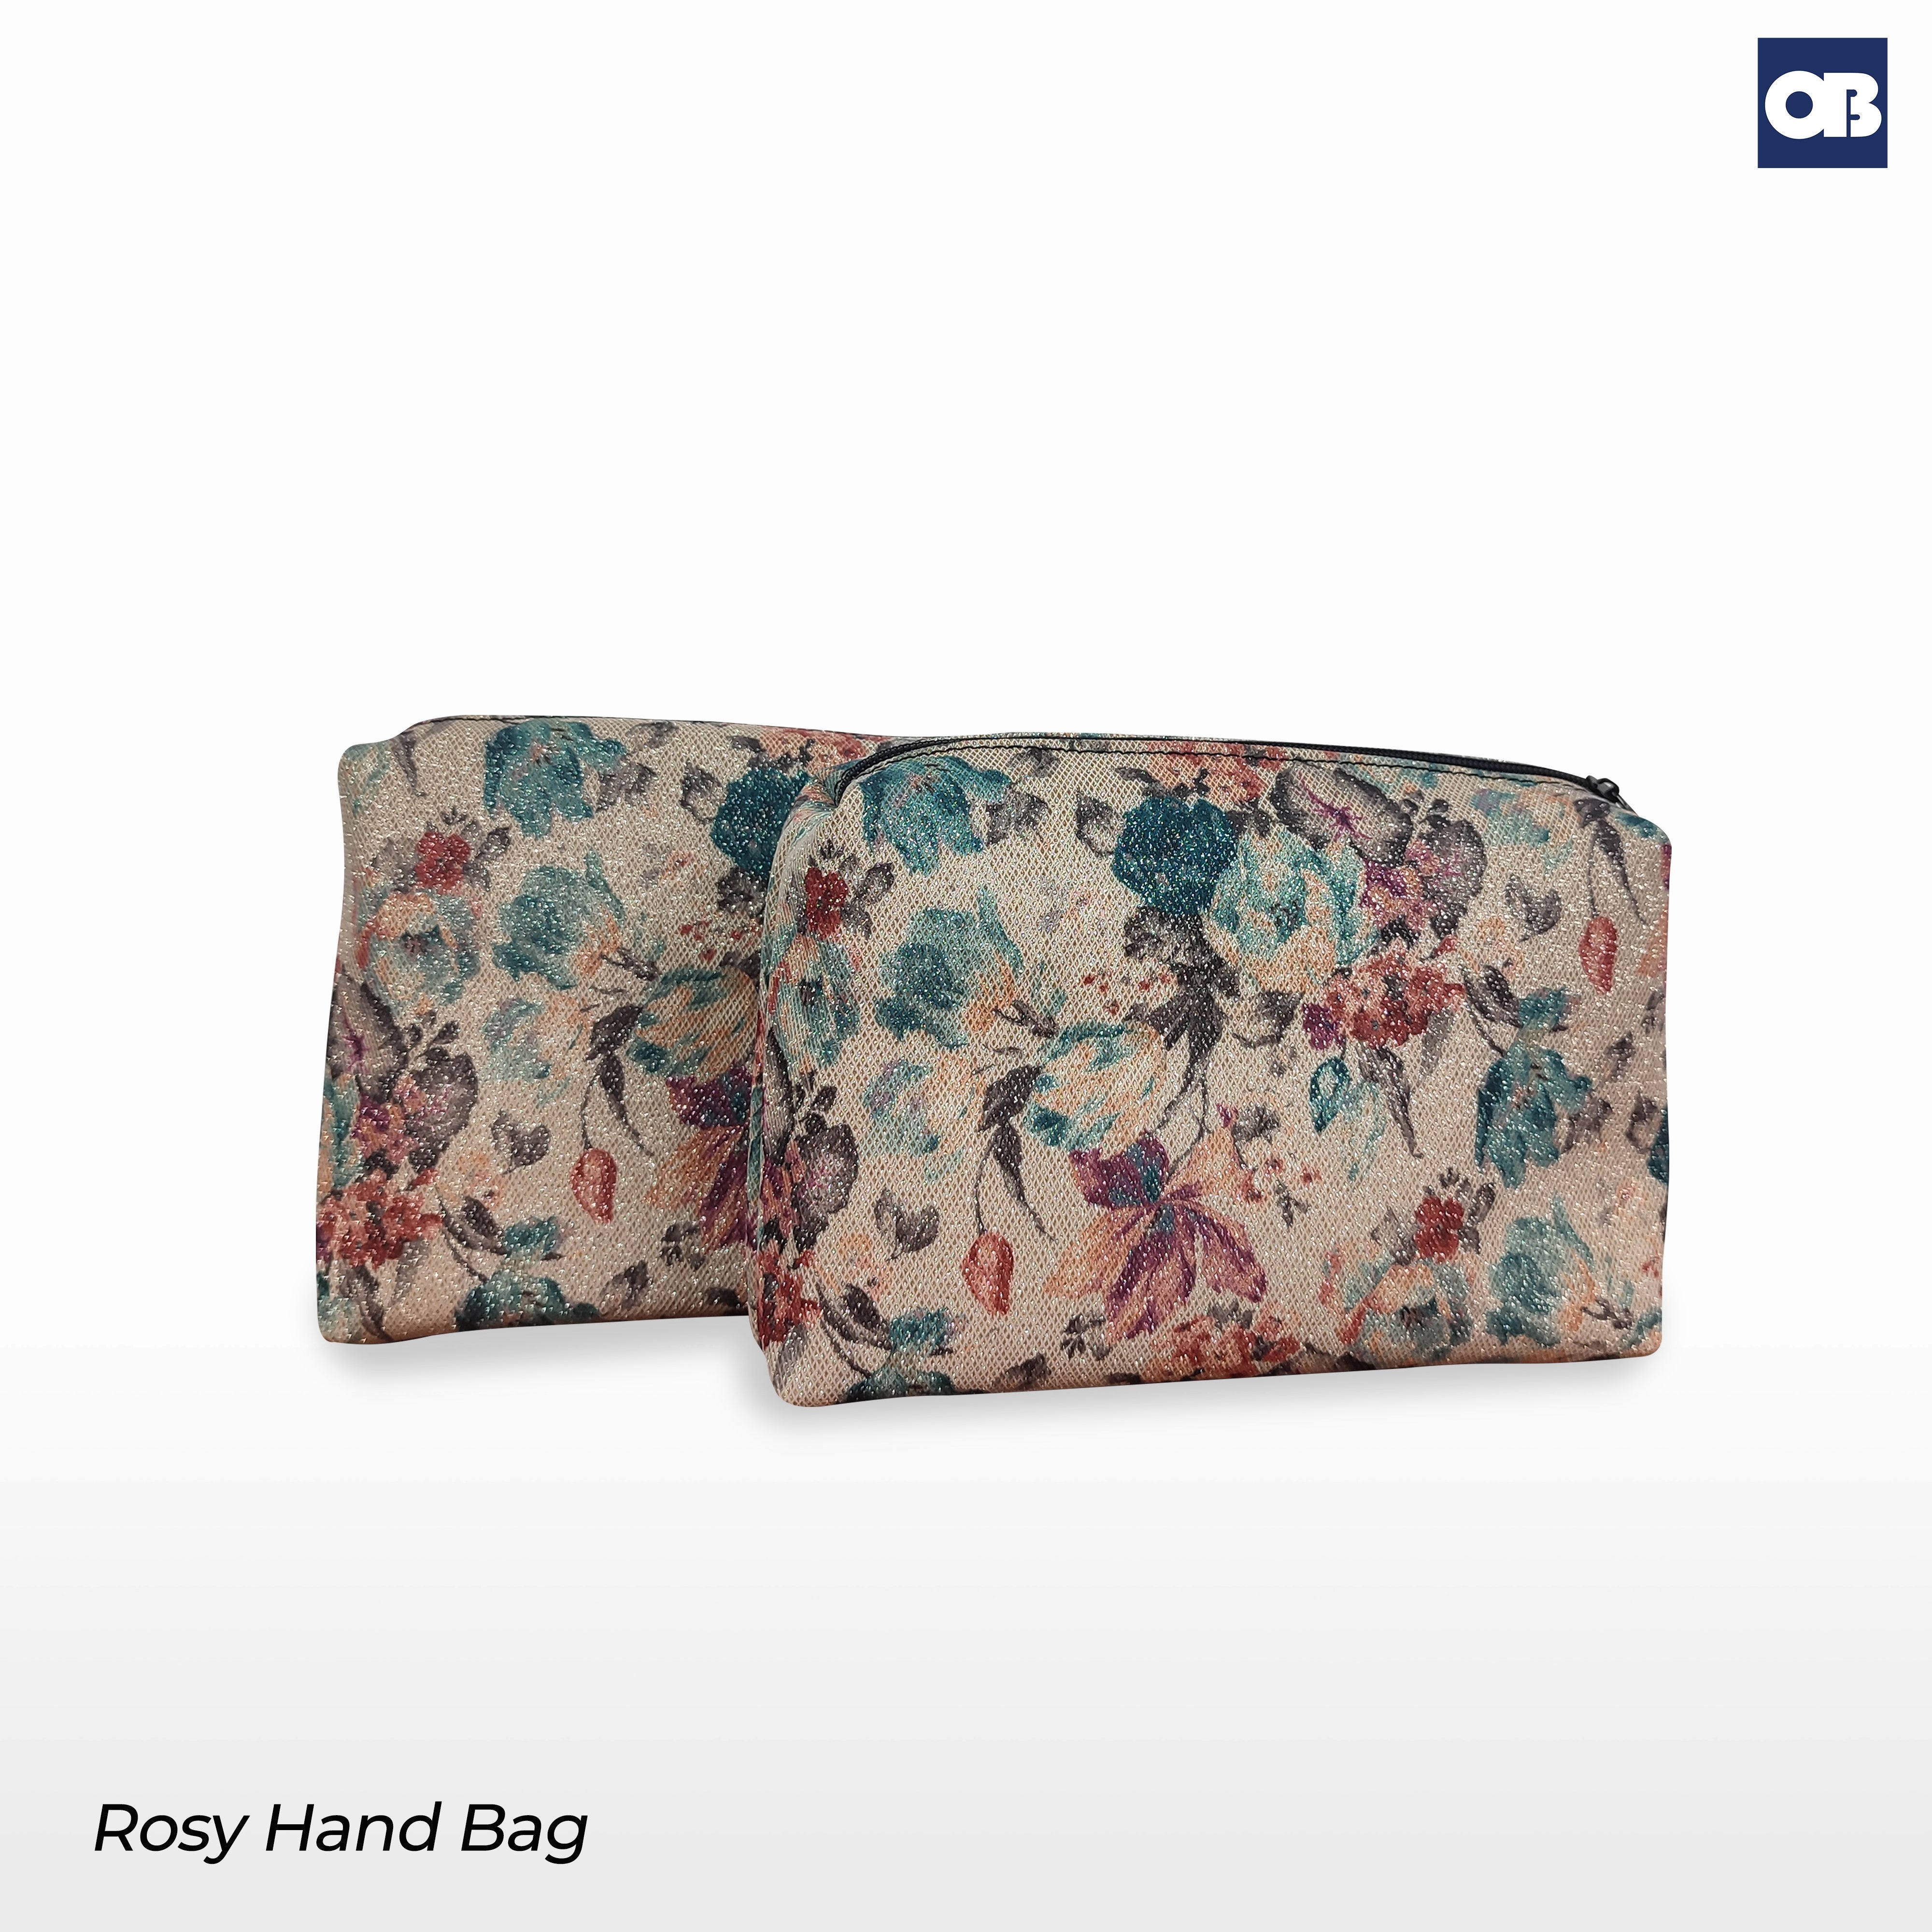 OB Rosy Hand Bag